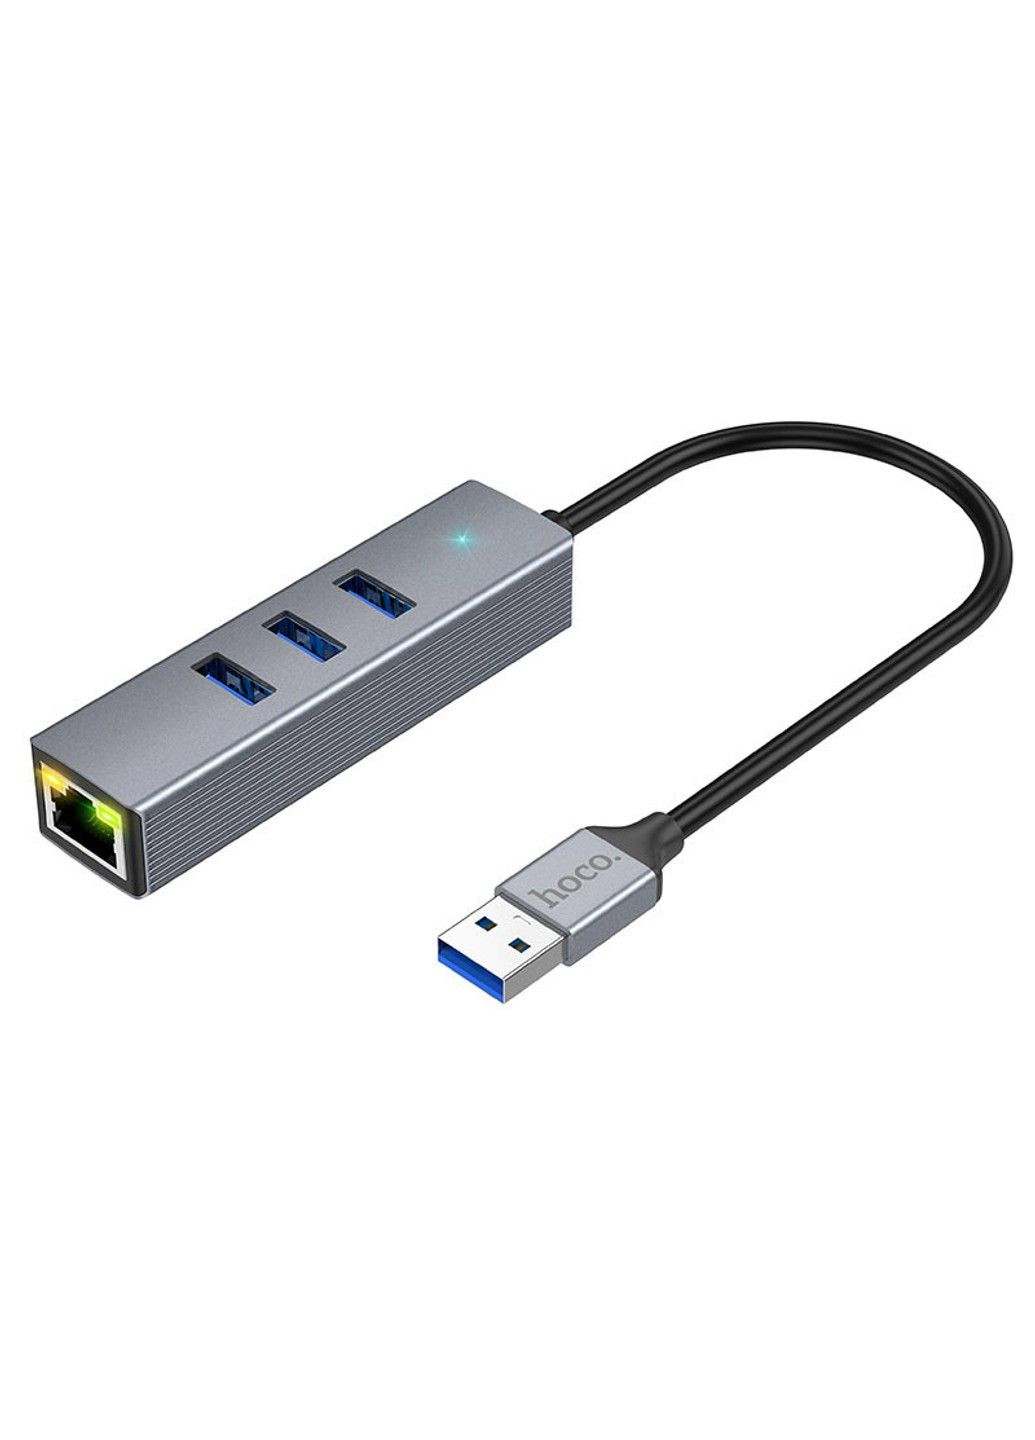 Переходник HUB HB34 Easy link USB Gigabit Ethernet adapter (USB to USB3.0*3+RJ45) Hoco (294723595)